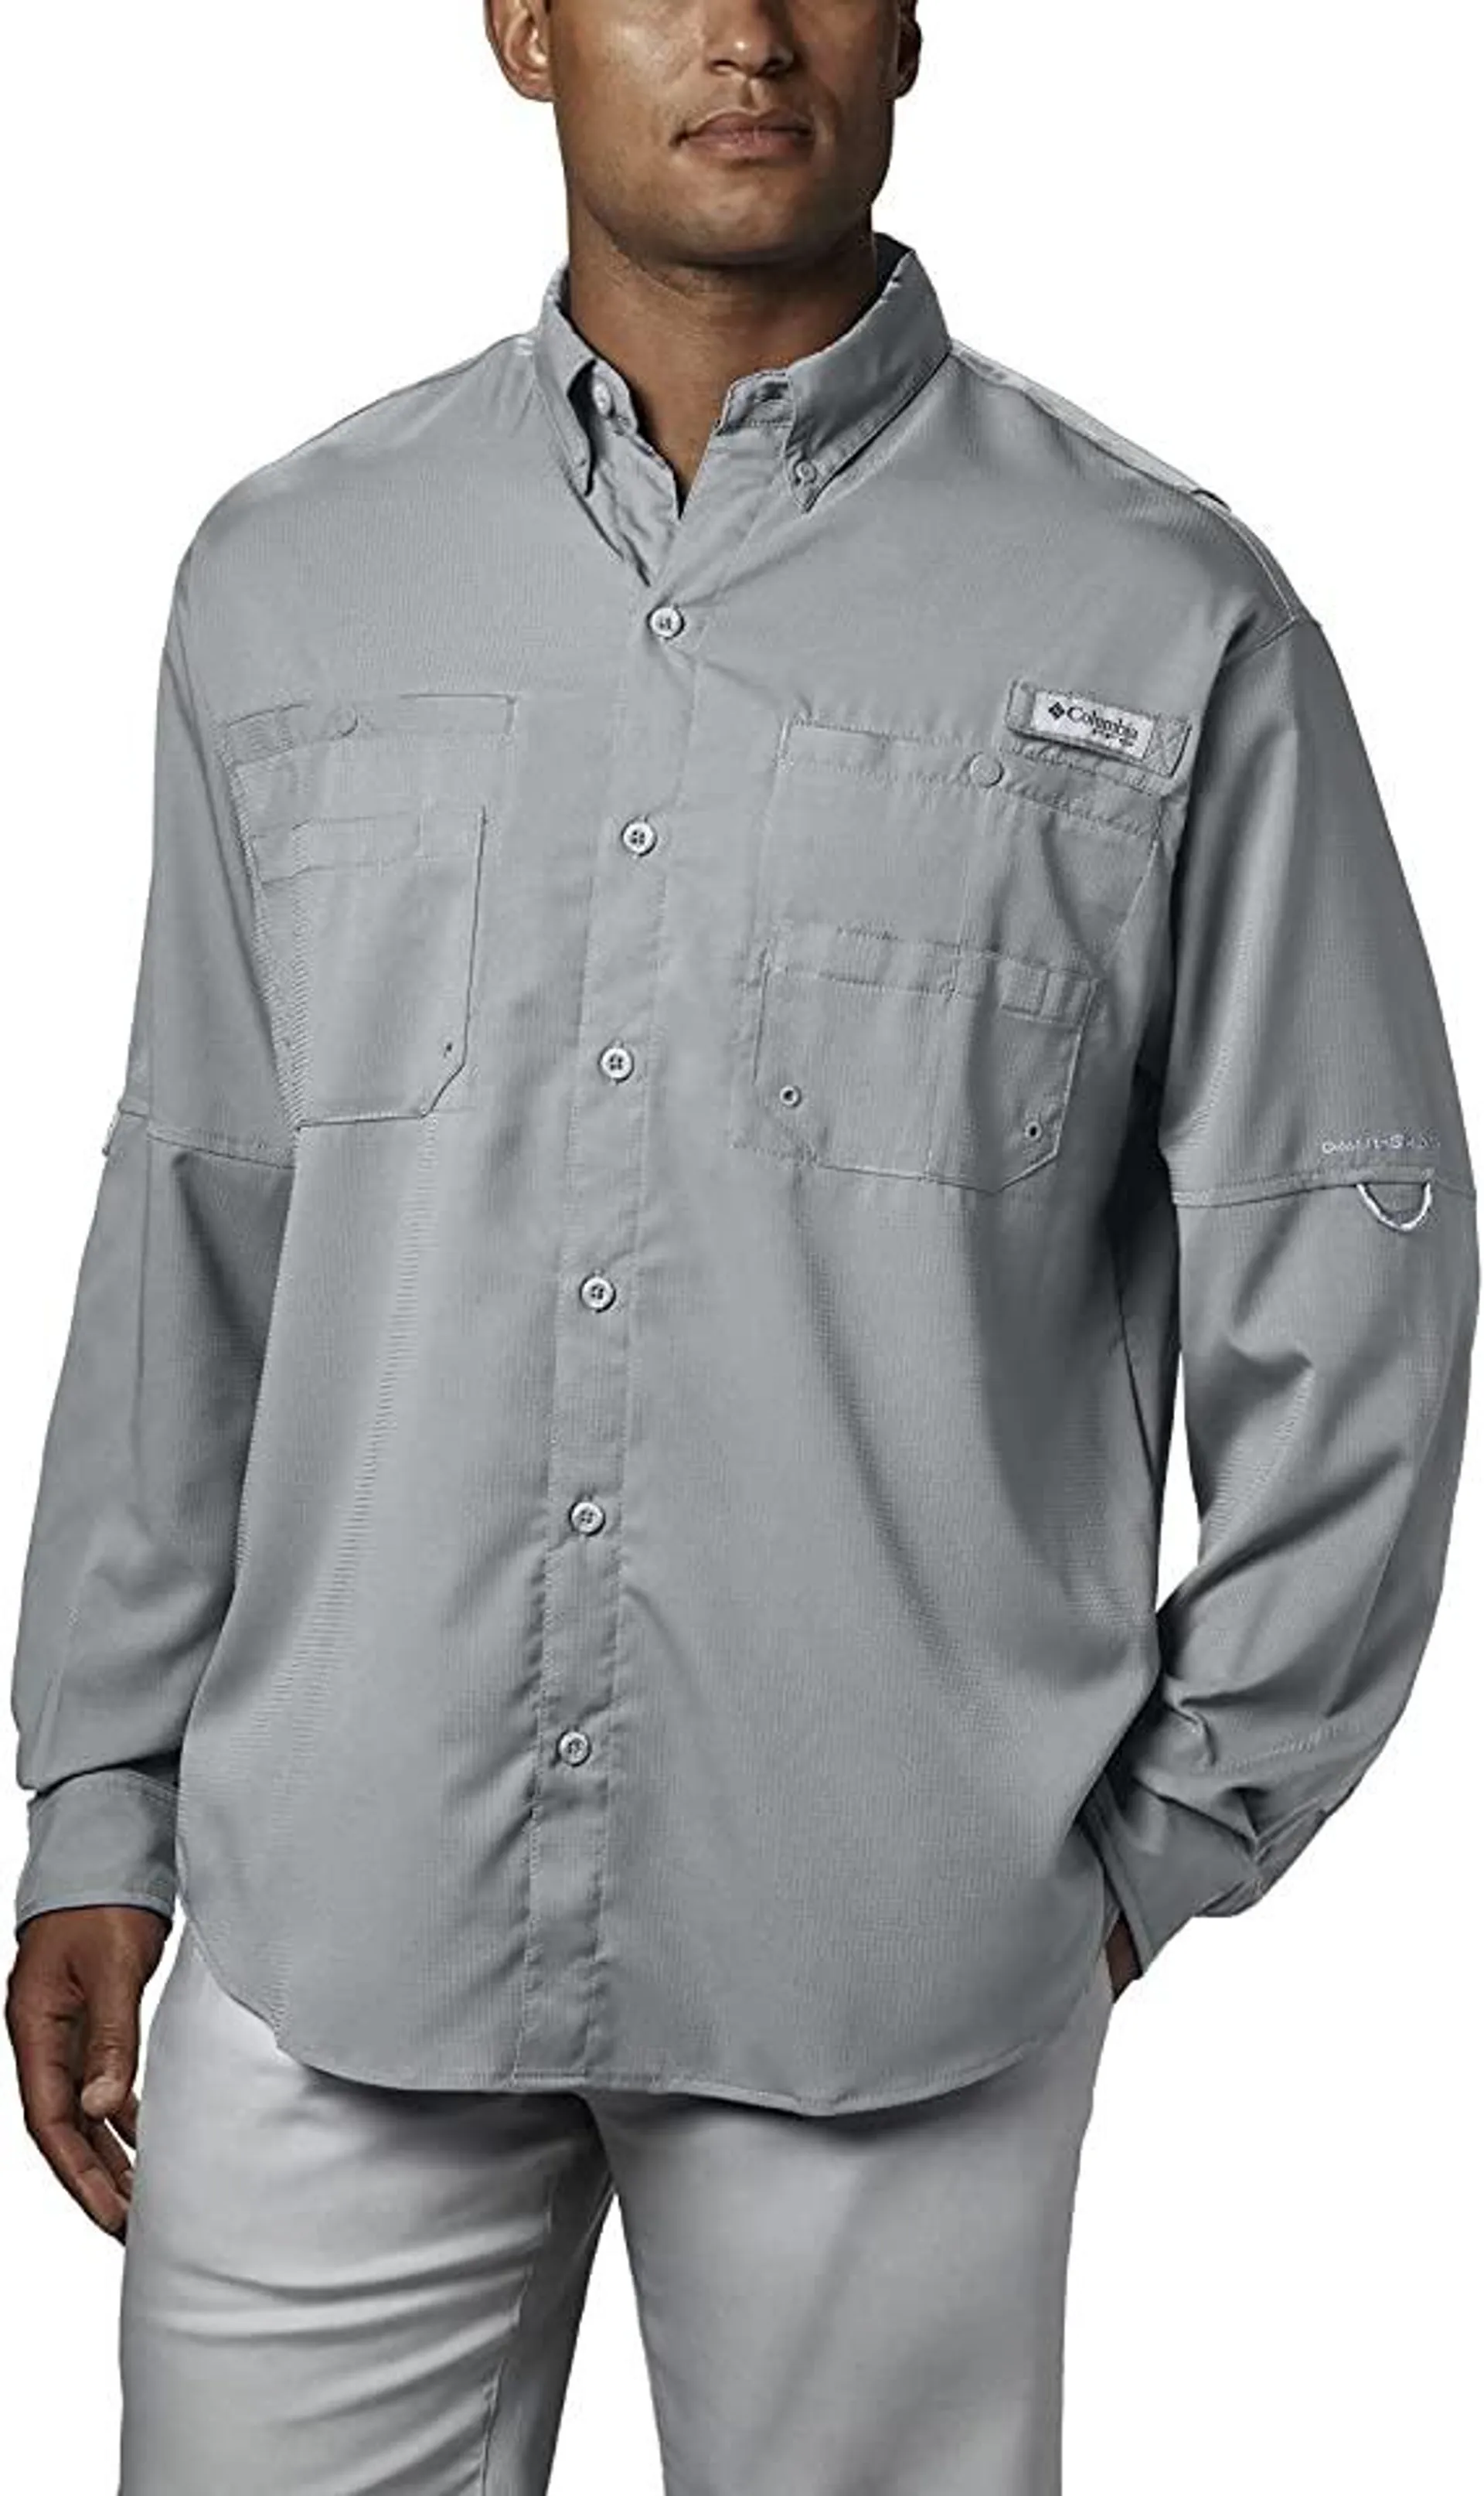 Columbia Men’s PFG Tamiami™ II Long Sleeve Shirt, Cool Grey, Large